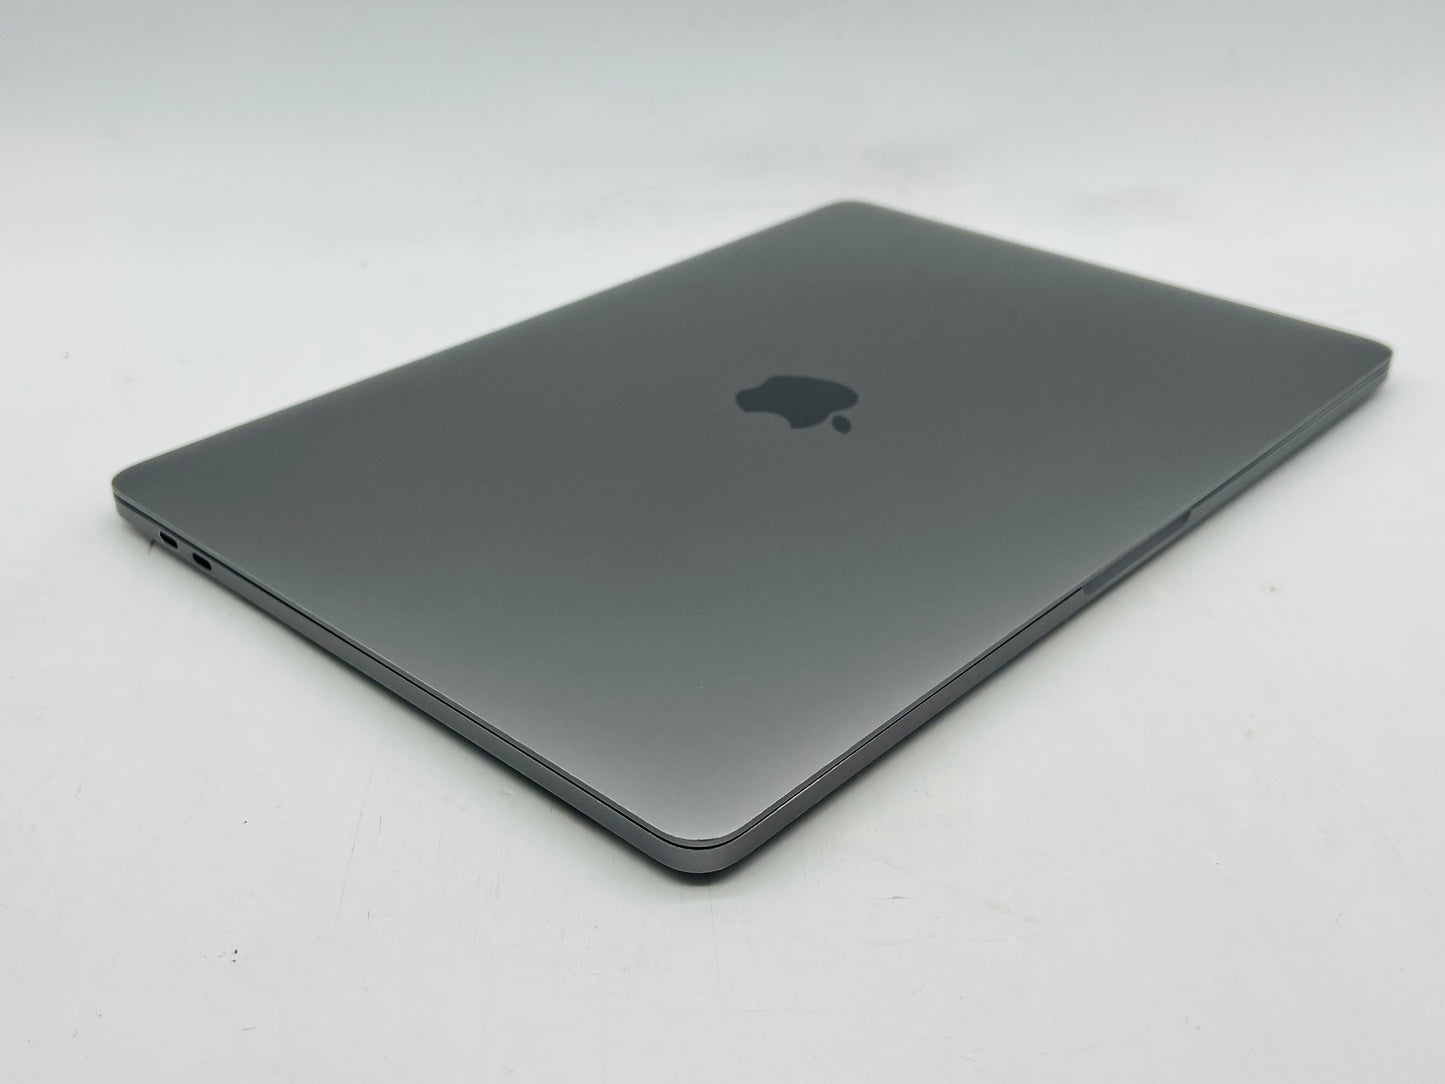 Apple 2019 MacBook Pro 13 in TB 2.4GHz i5 16GB RAM 1TB SSD IIPG655 - Very Good